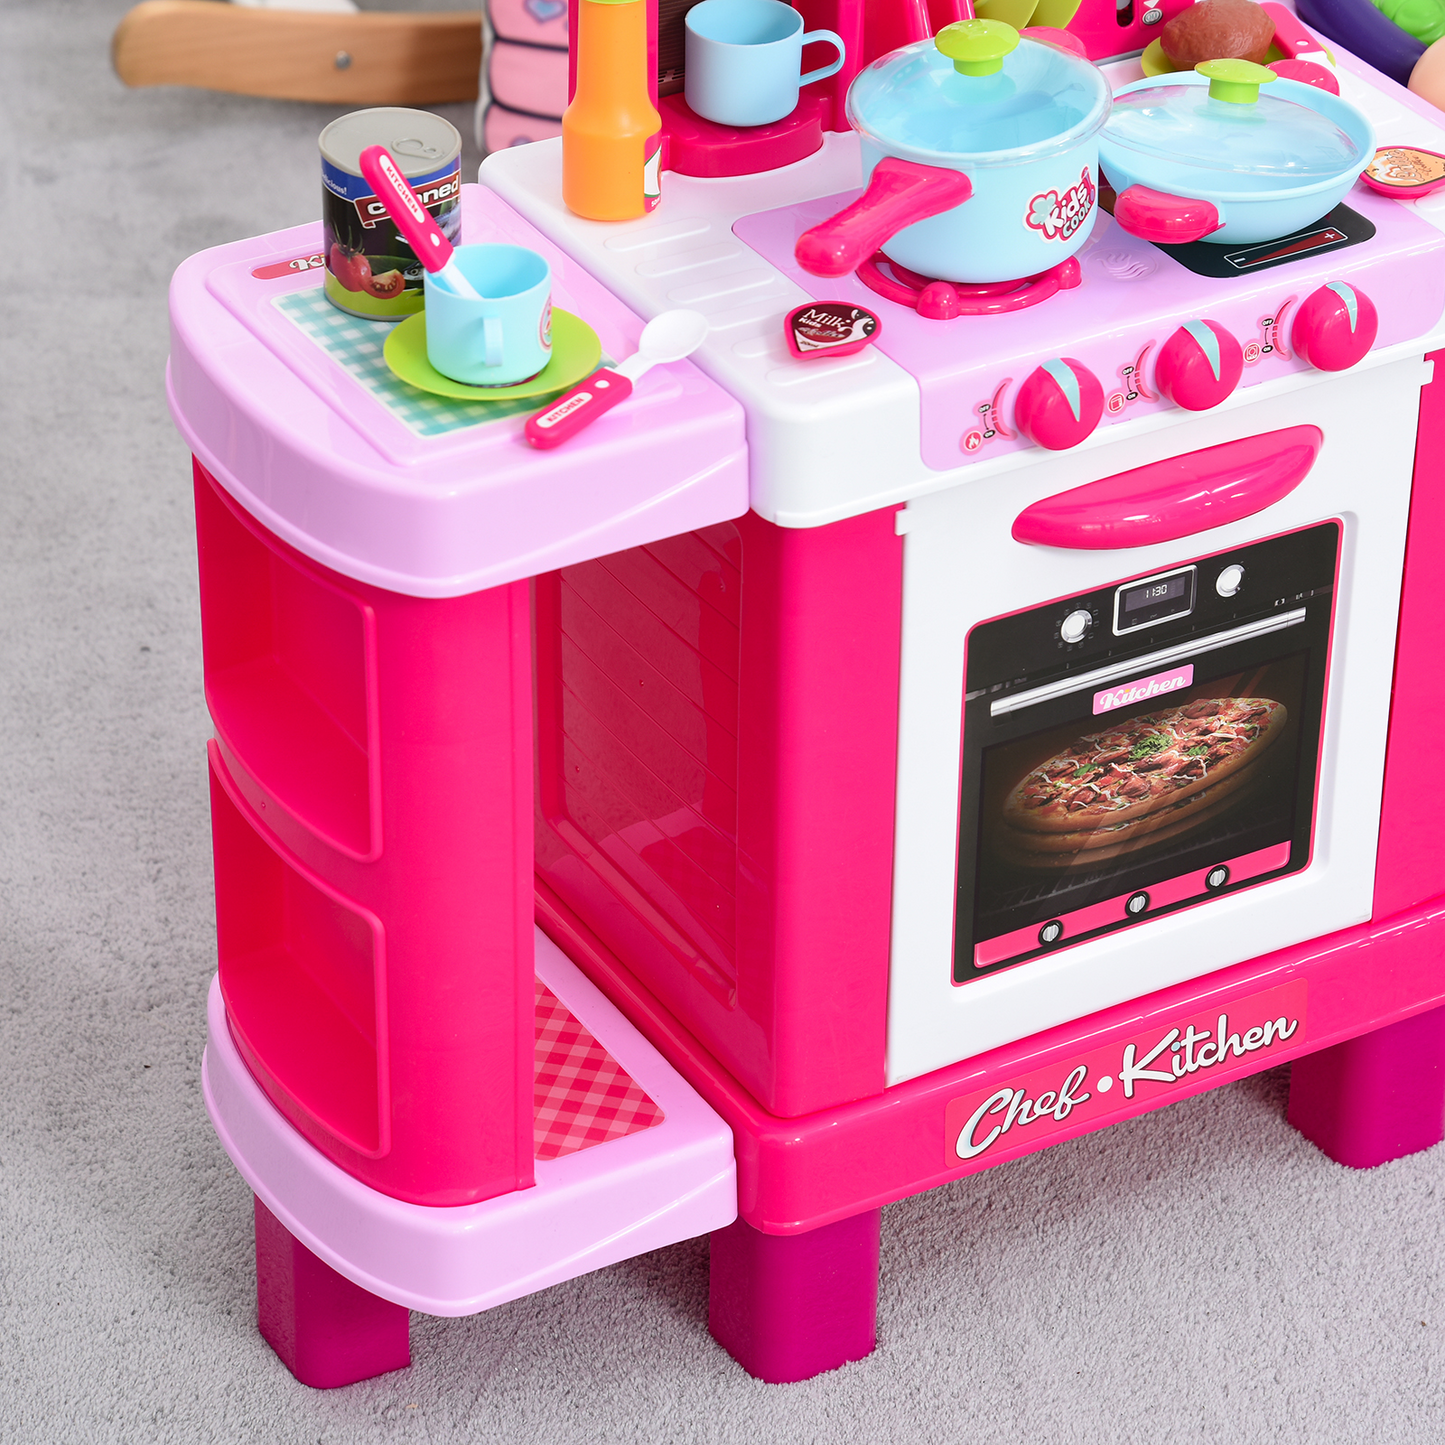 HOMCOM 38 Pcs Kids Children Kitchen Play Set w/ Realistic Sounds Lights Food Utensils Pots Pans Appliances Toy Game Pink